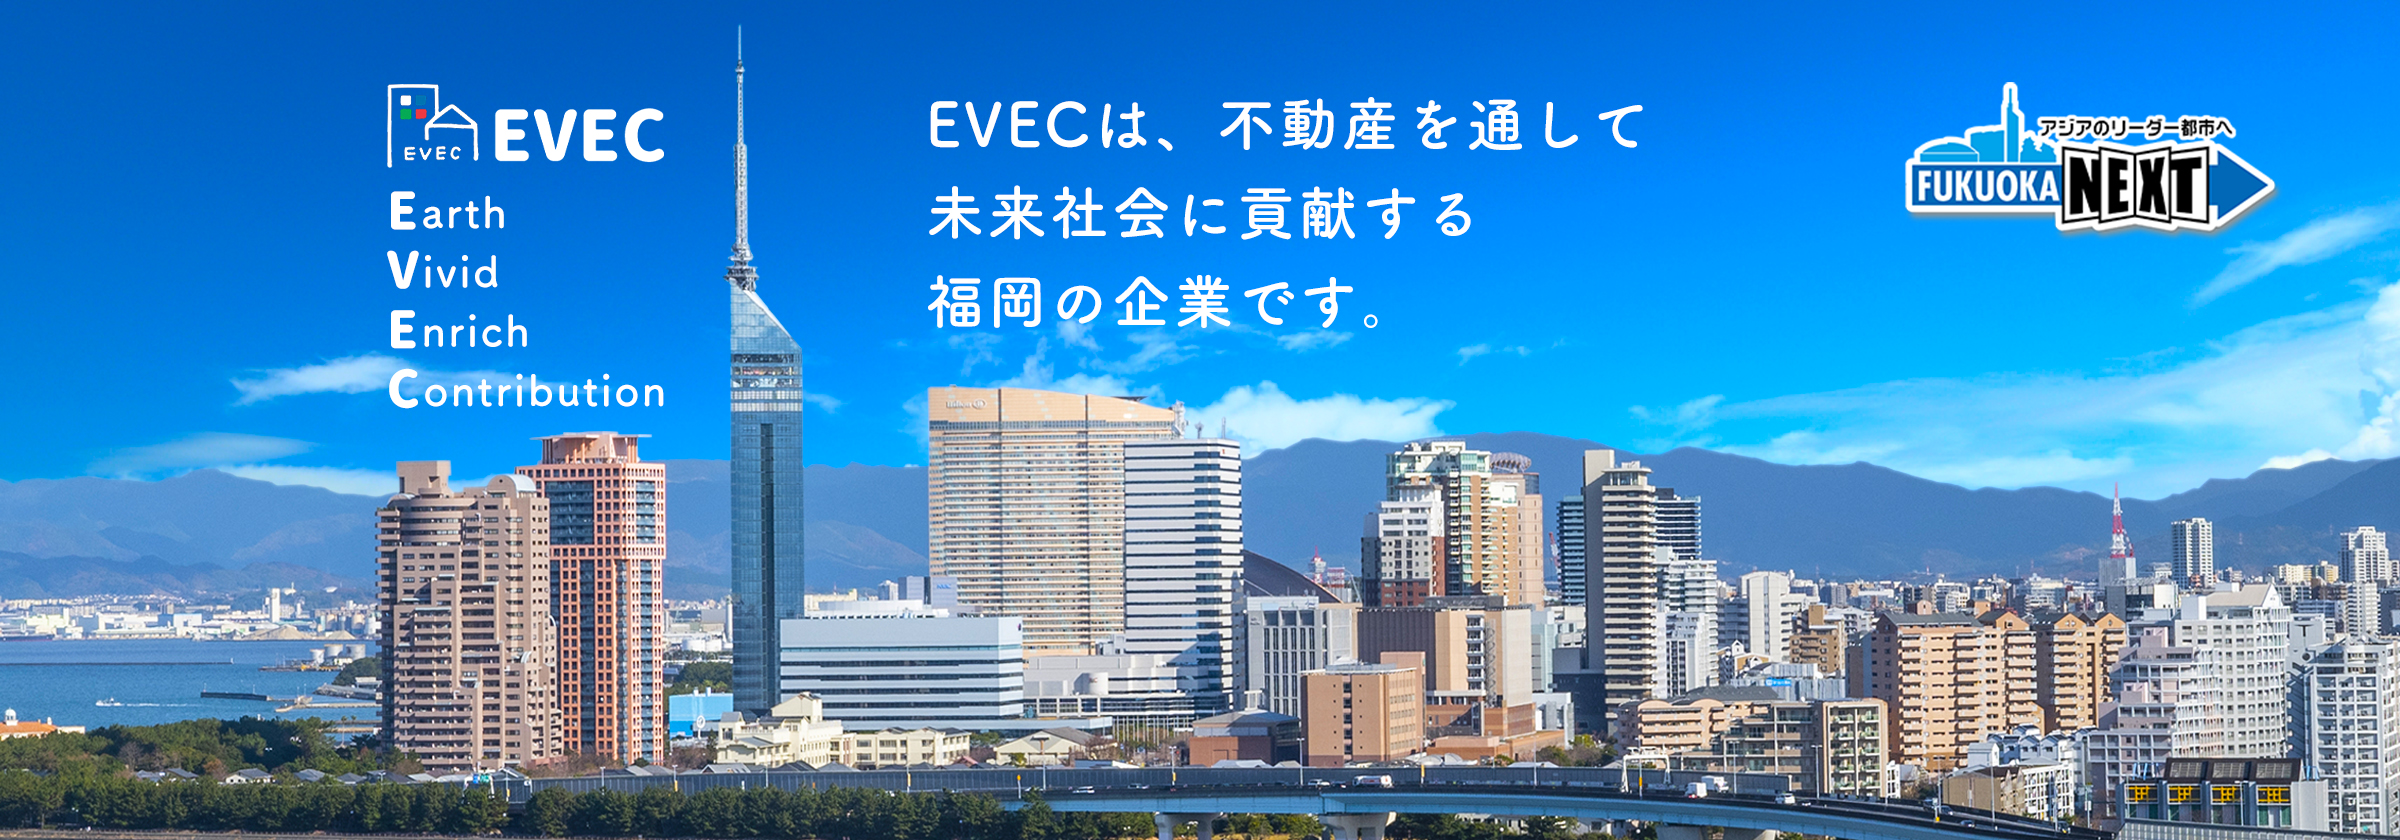 EVECは、不動産を通して人や社会の鮮やかで富んだ未来に貢献する福岡の企業です。